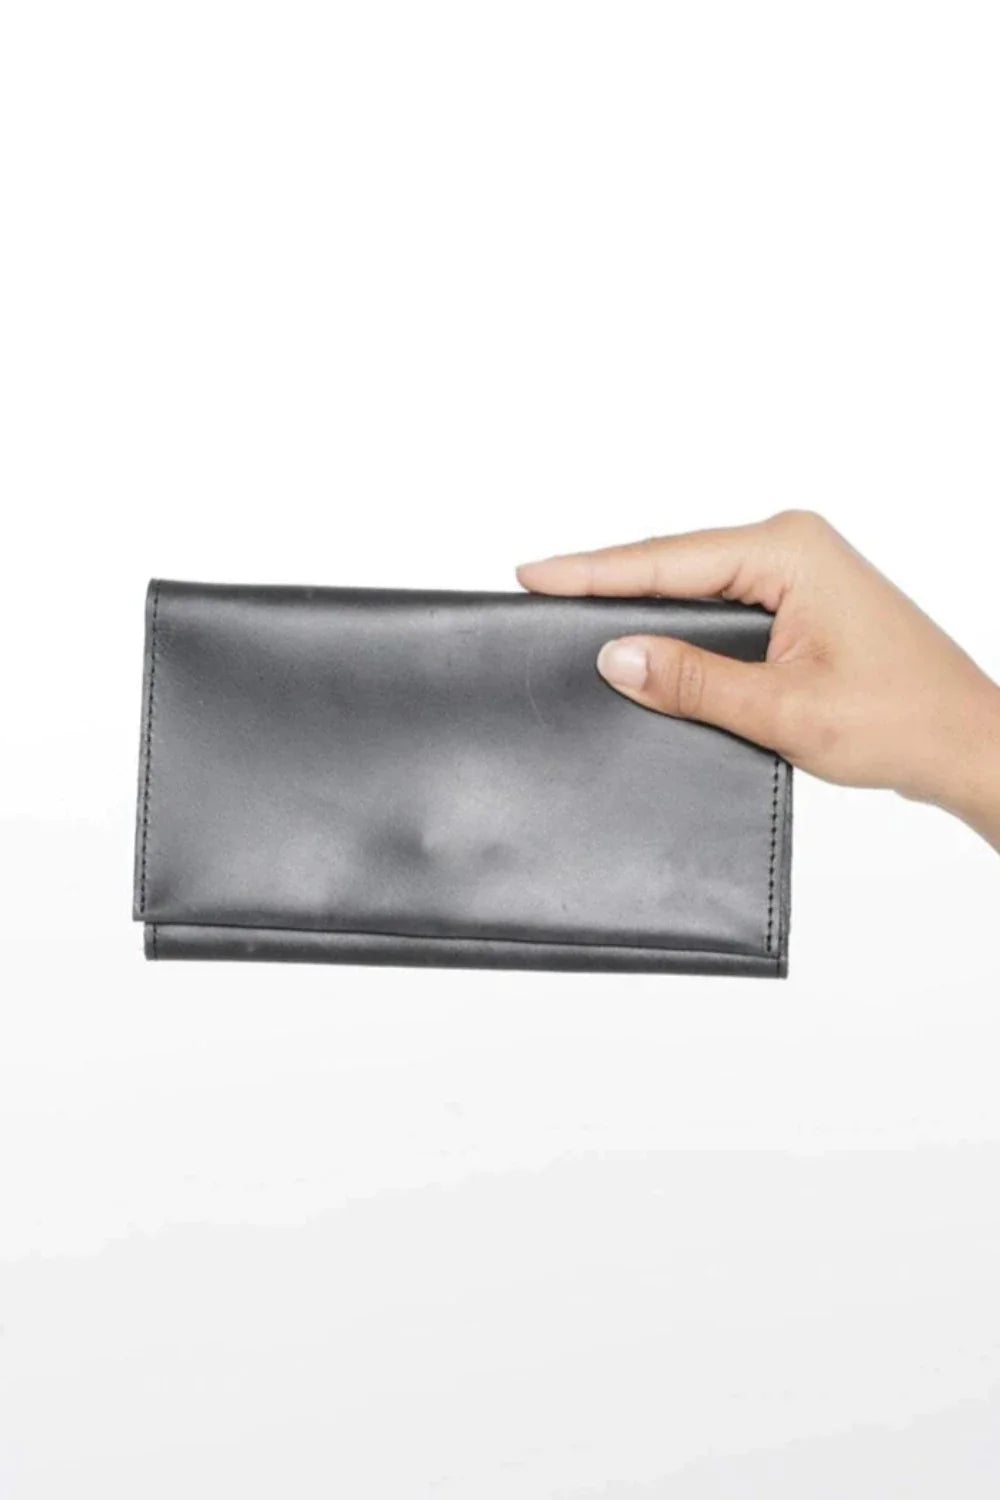 Debre Wallet in Black by FashionABLE